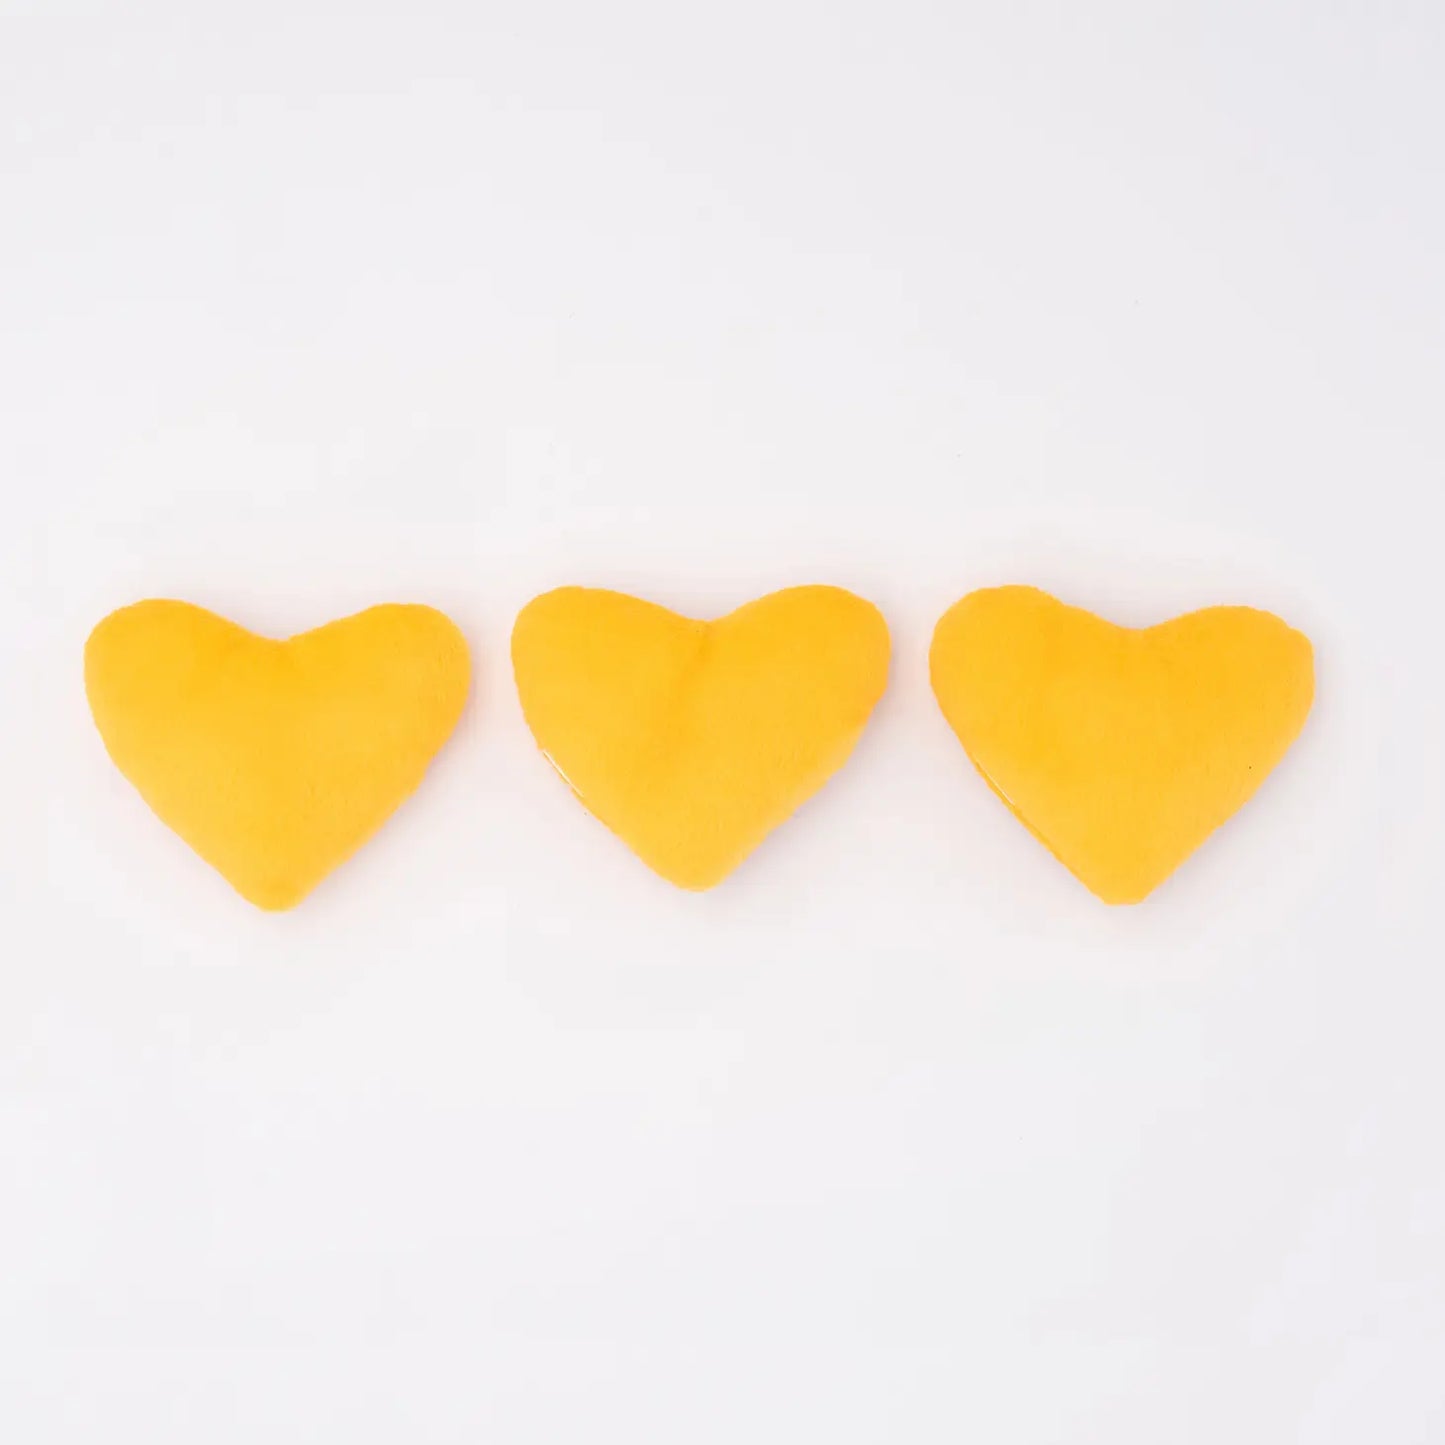 "Zippy Paws" Valentine's Miniz 3-Pack Heart Cookies